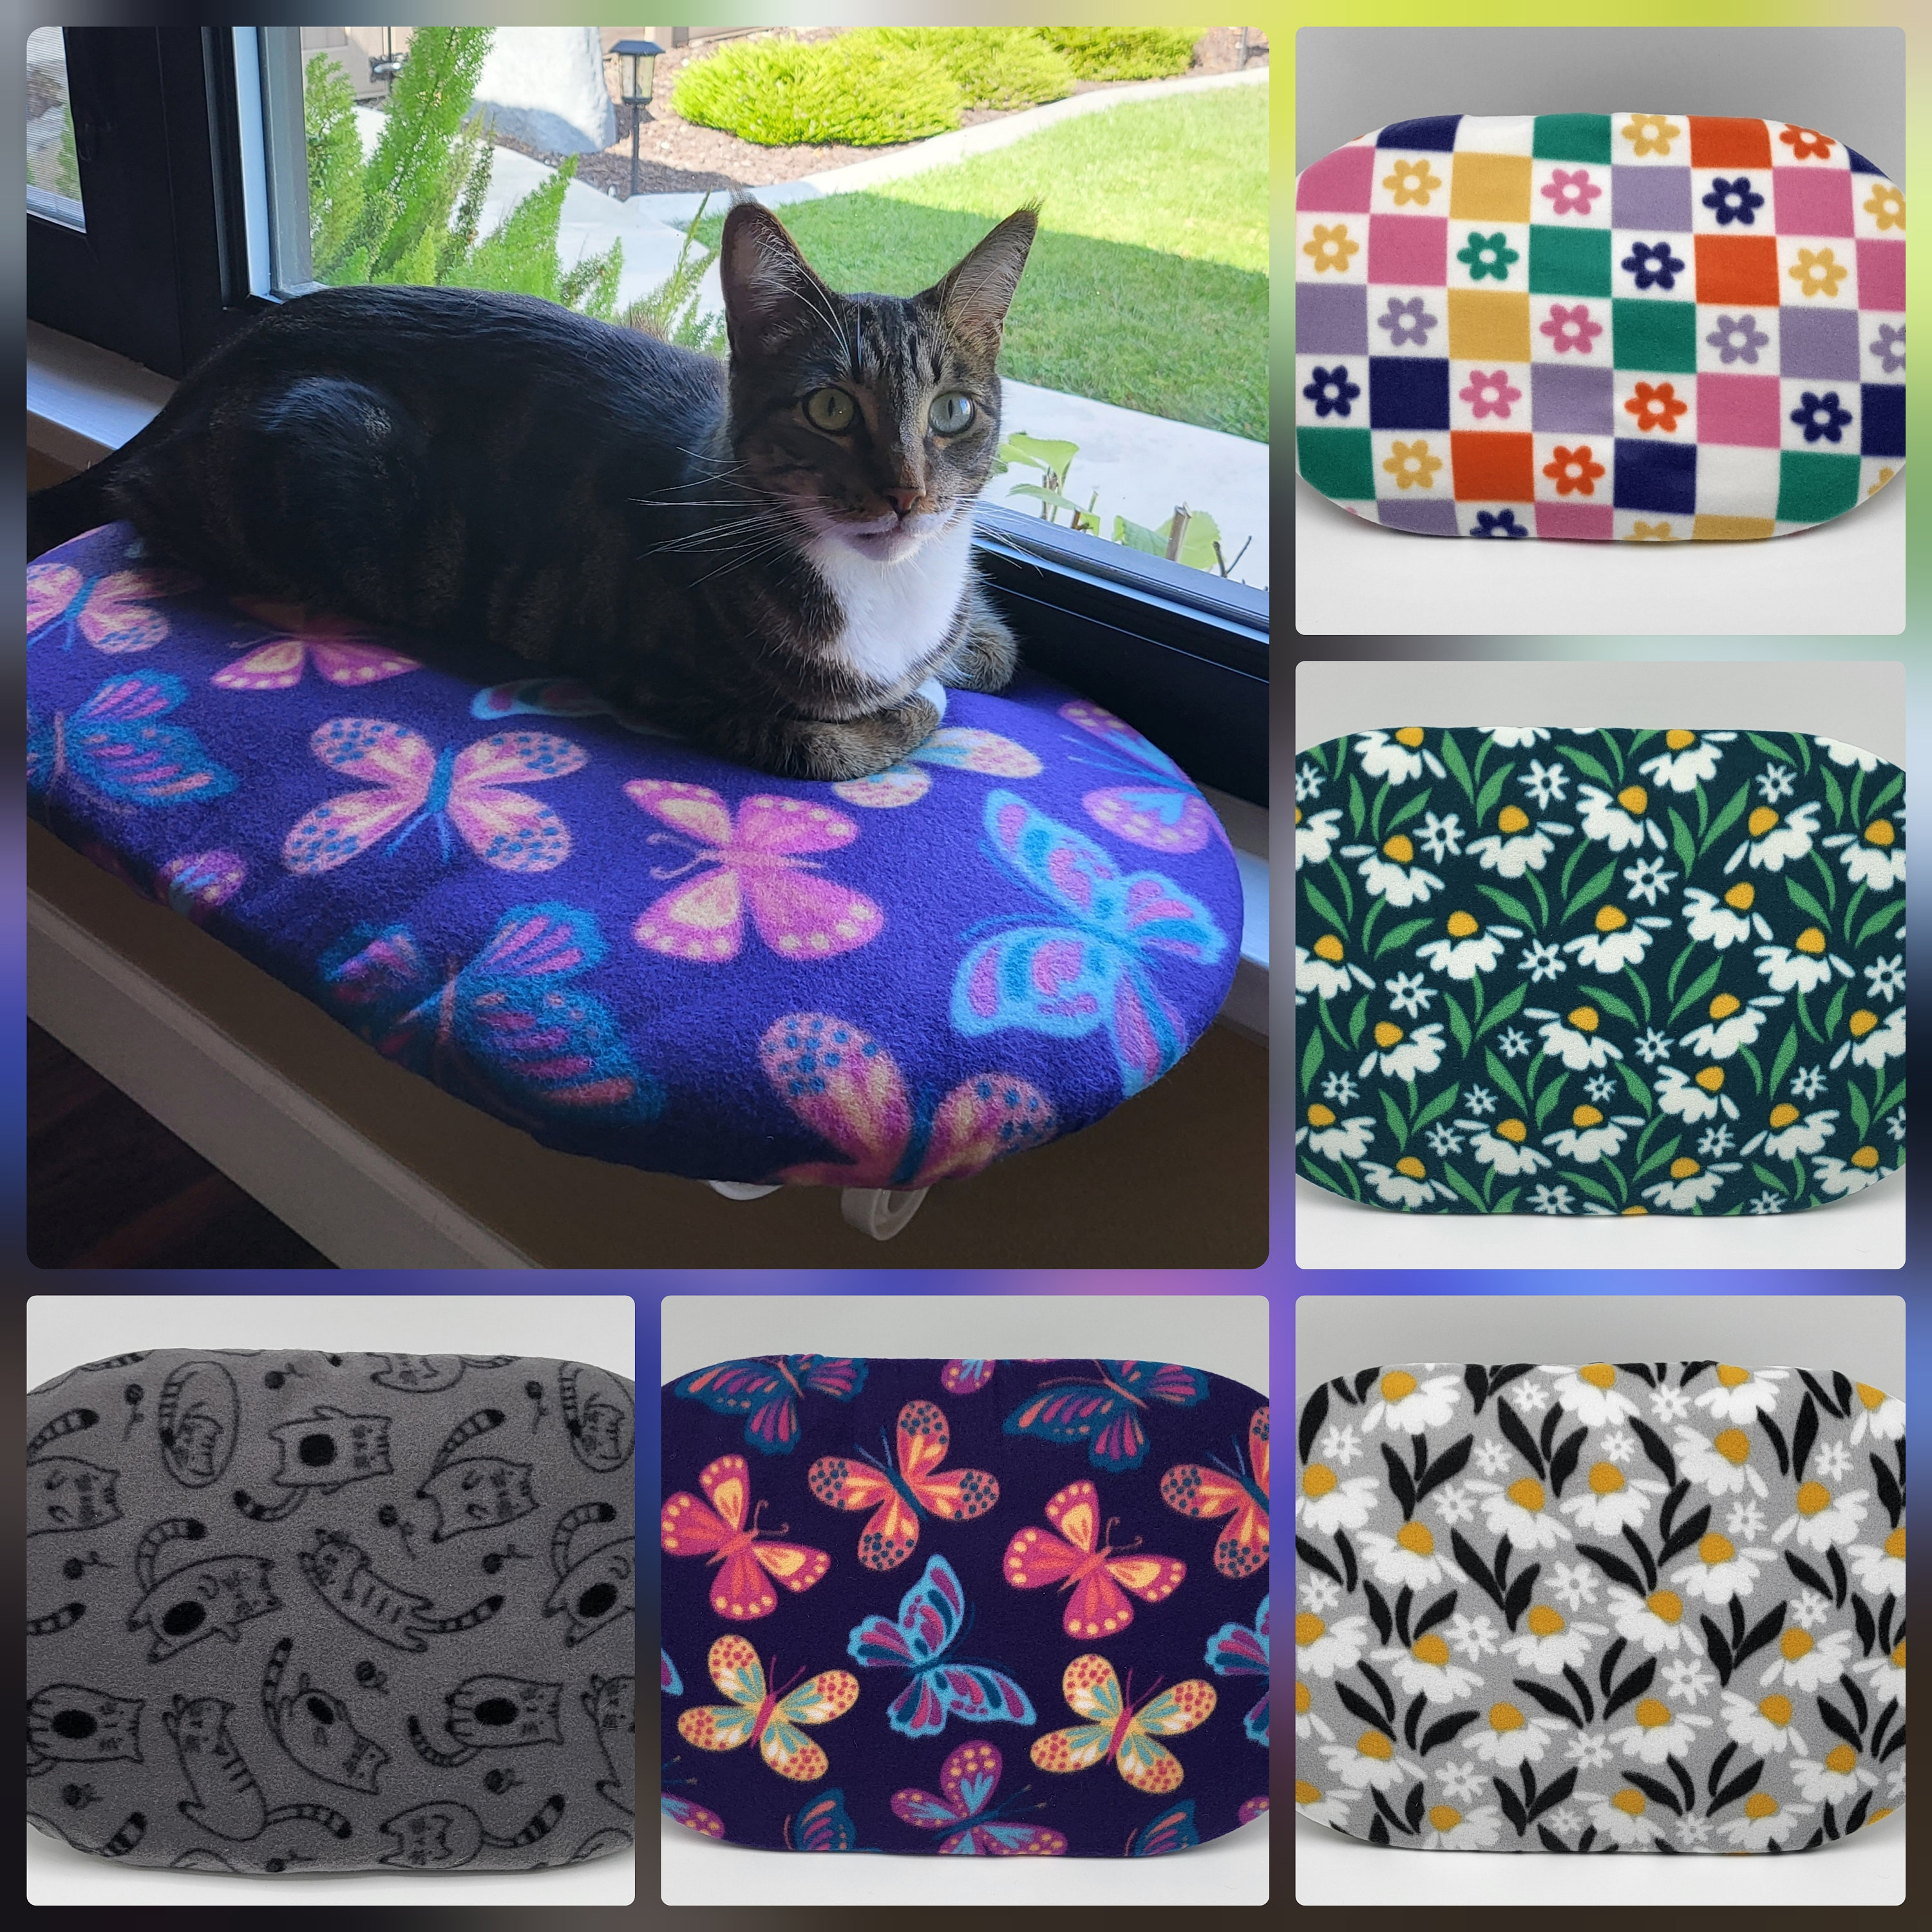 Cat Claw Cushion, Cute Soft Plush Seat Cushion, Cat Paw Shape Warm